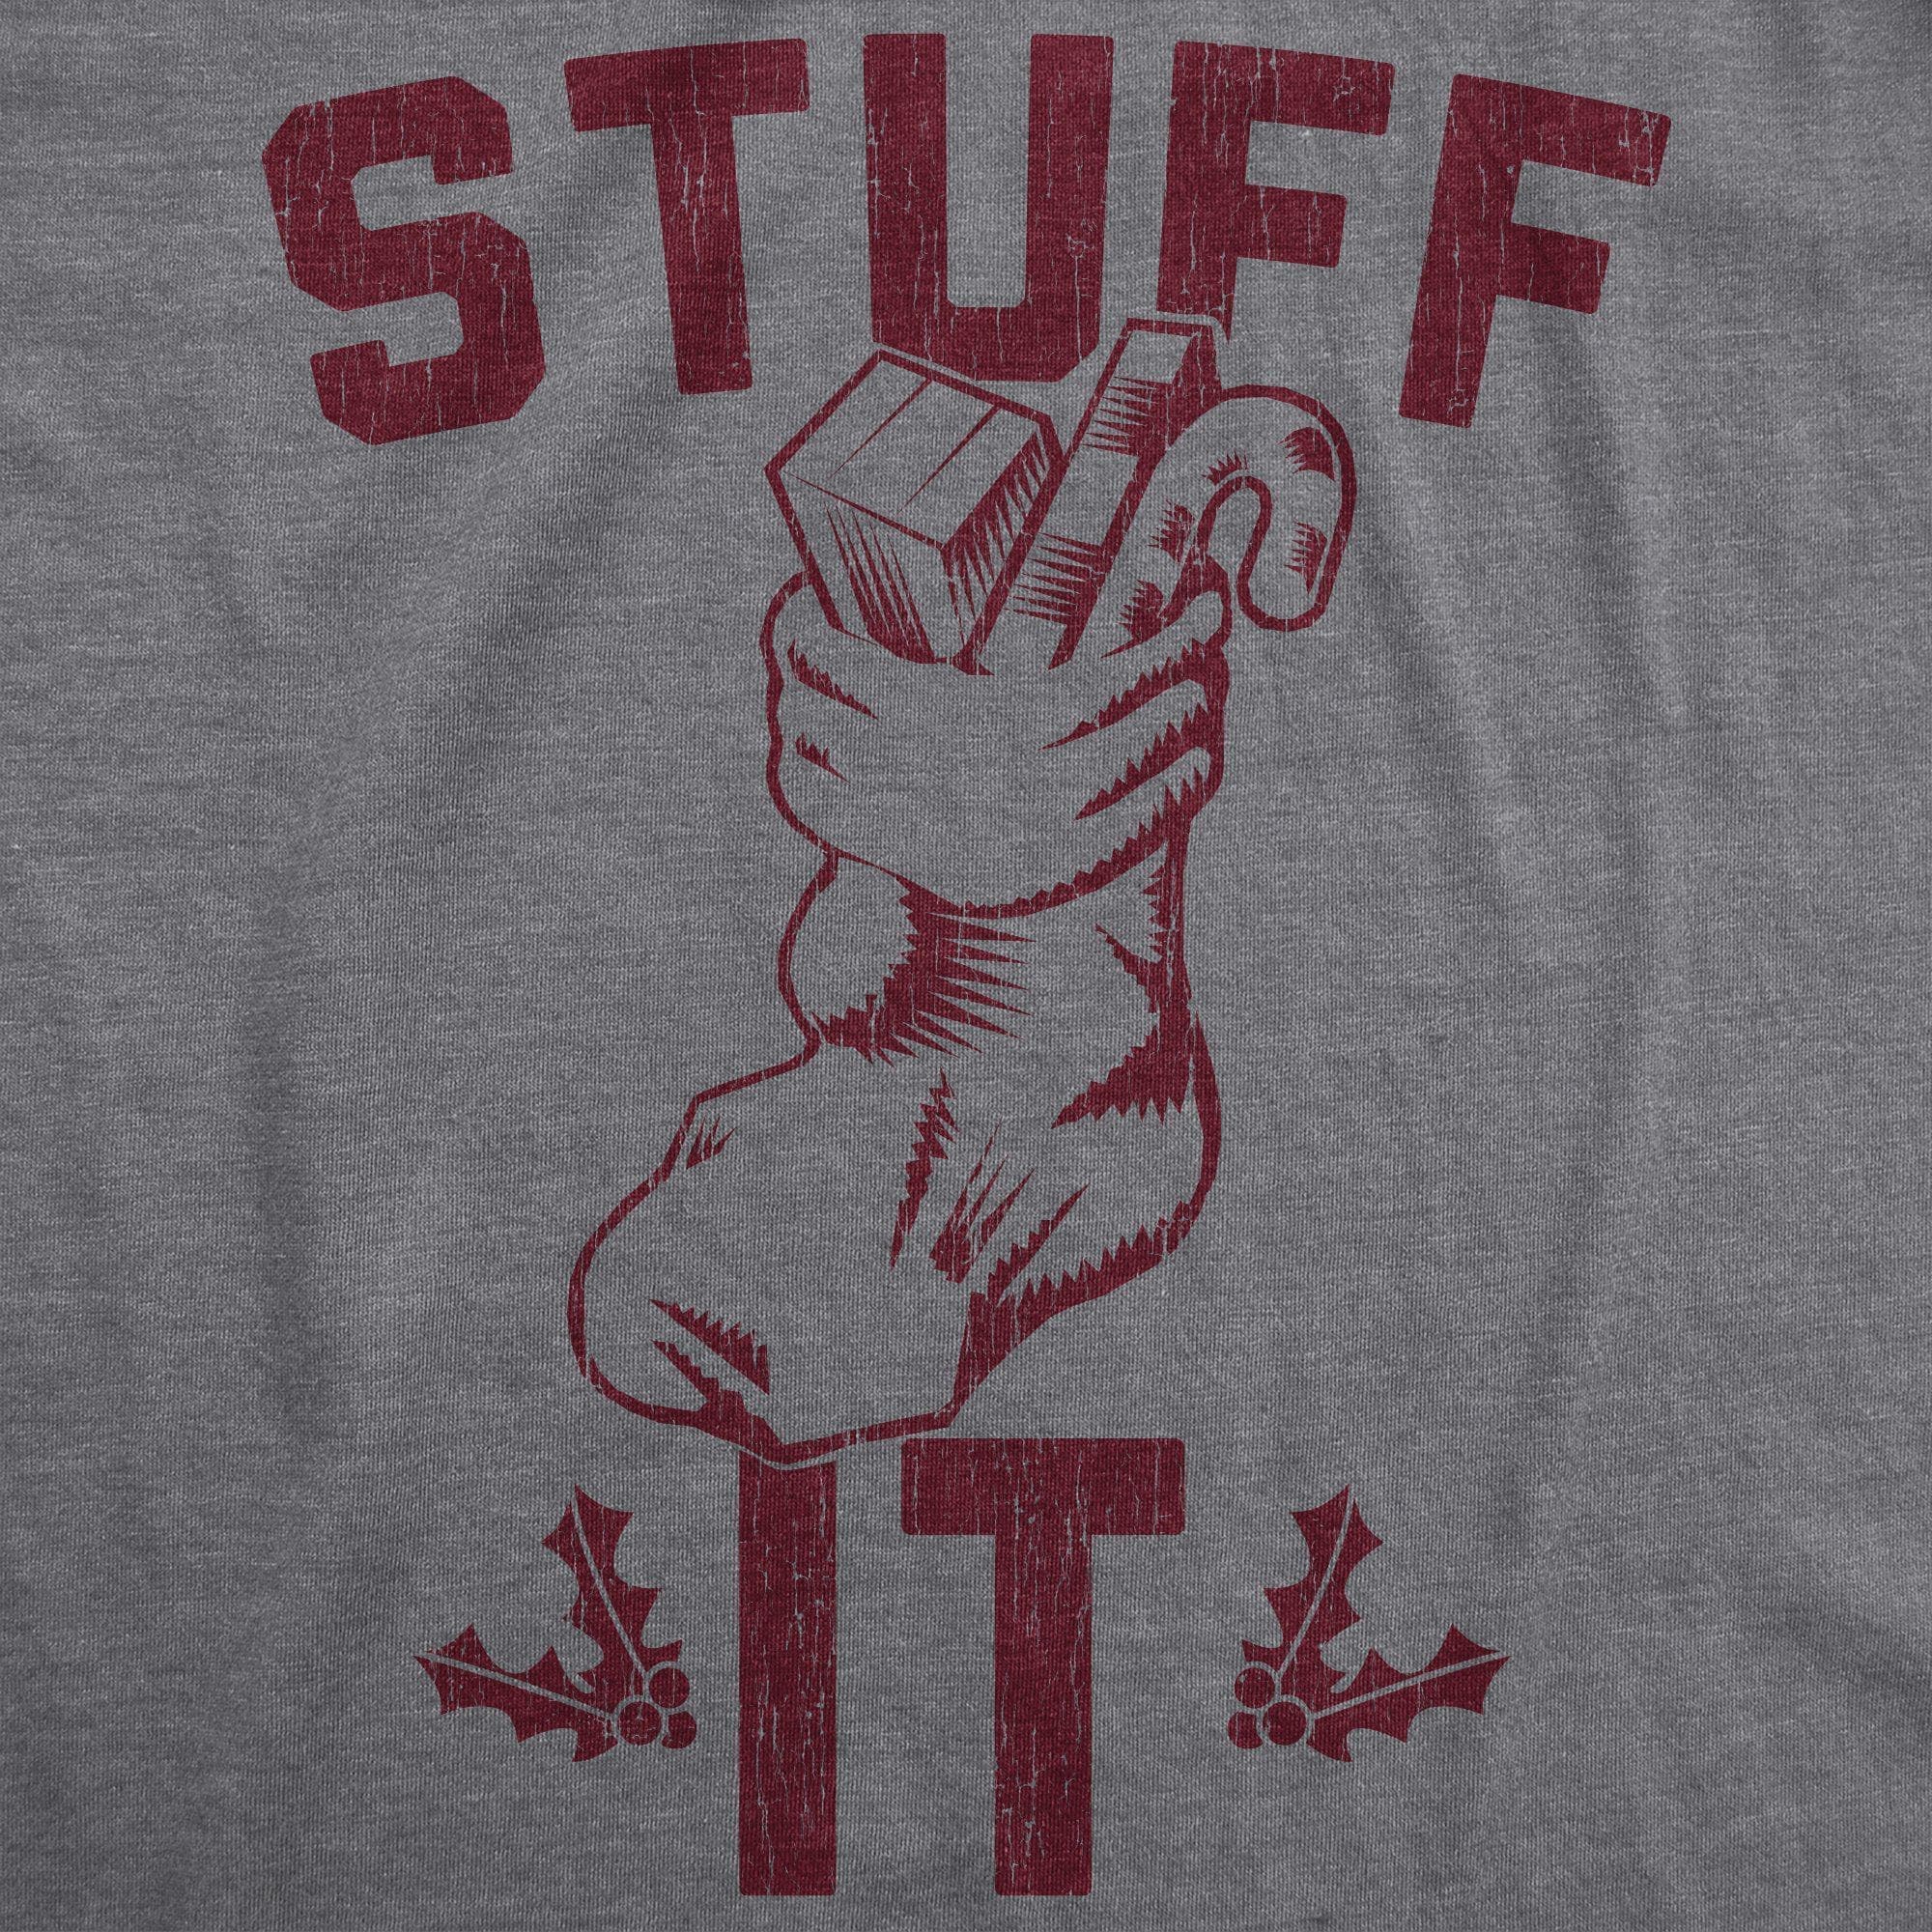 Stuff It Men's Tshirt - Crazy Dog T-Shirts